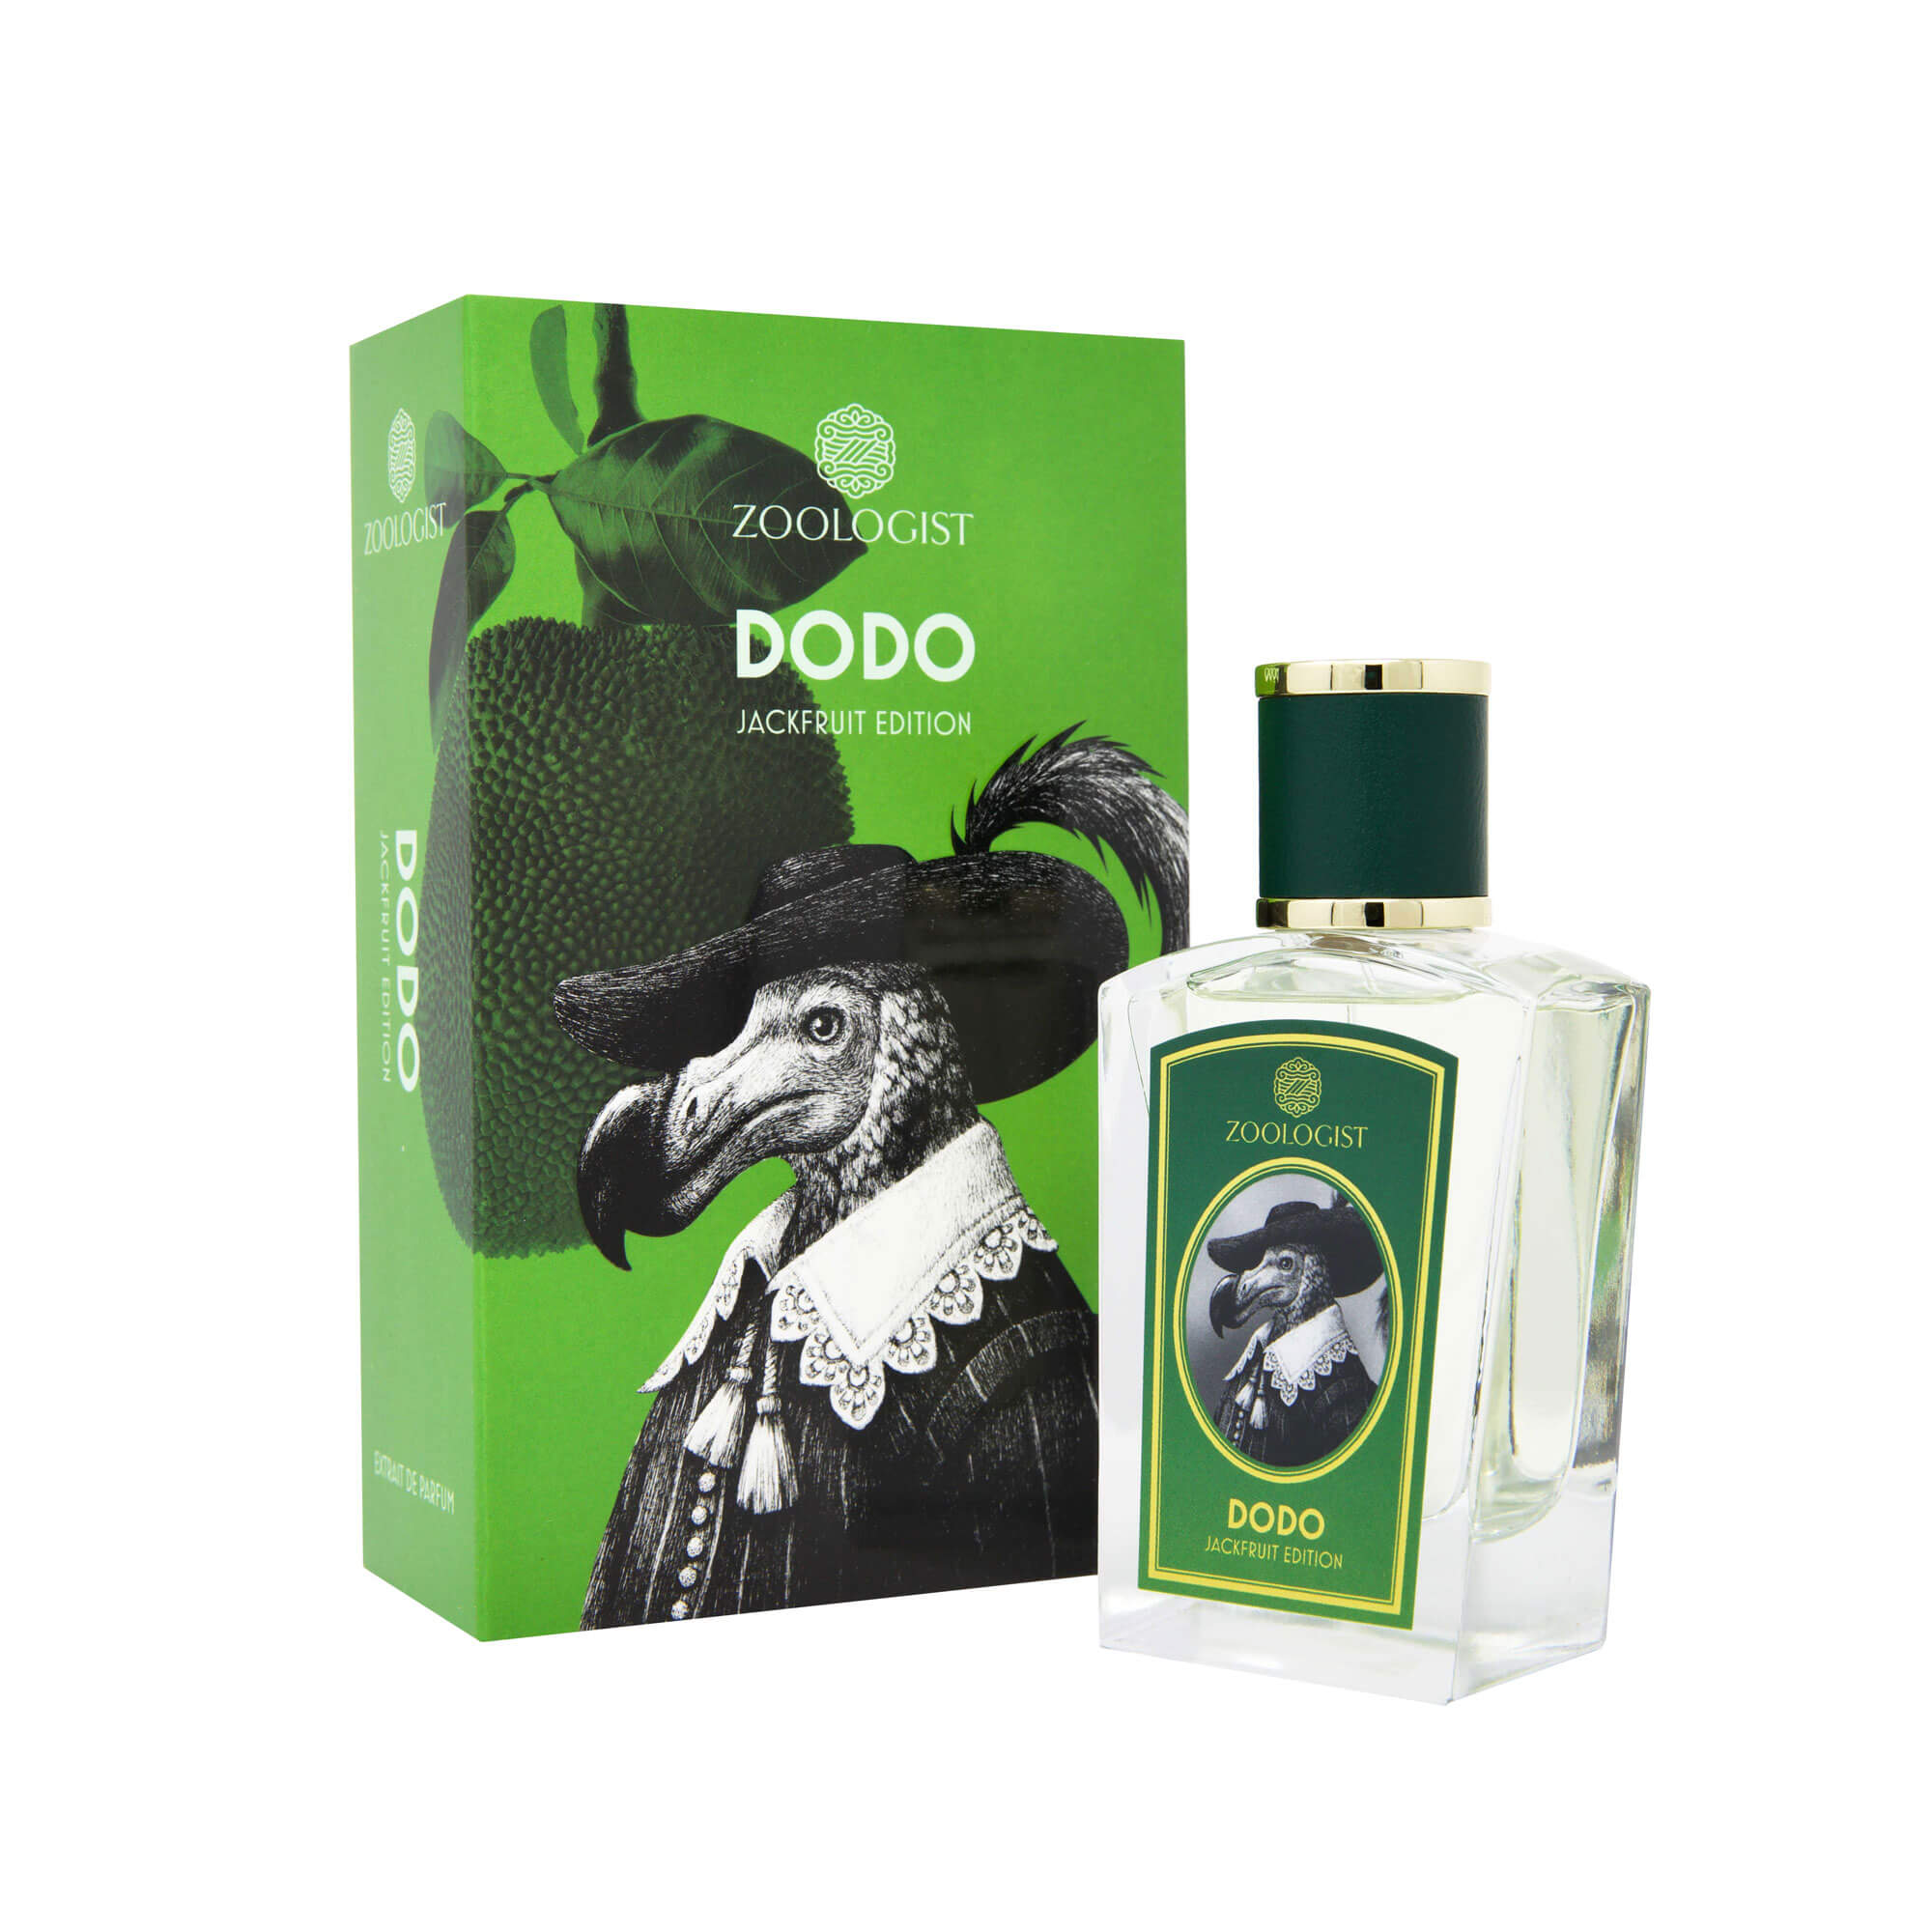 Zoologist Dodo Extrait De Parfum Jackfruit Edition